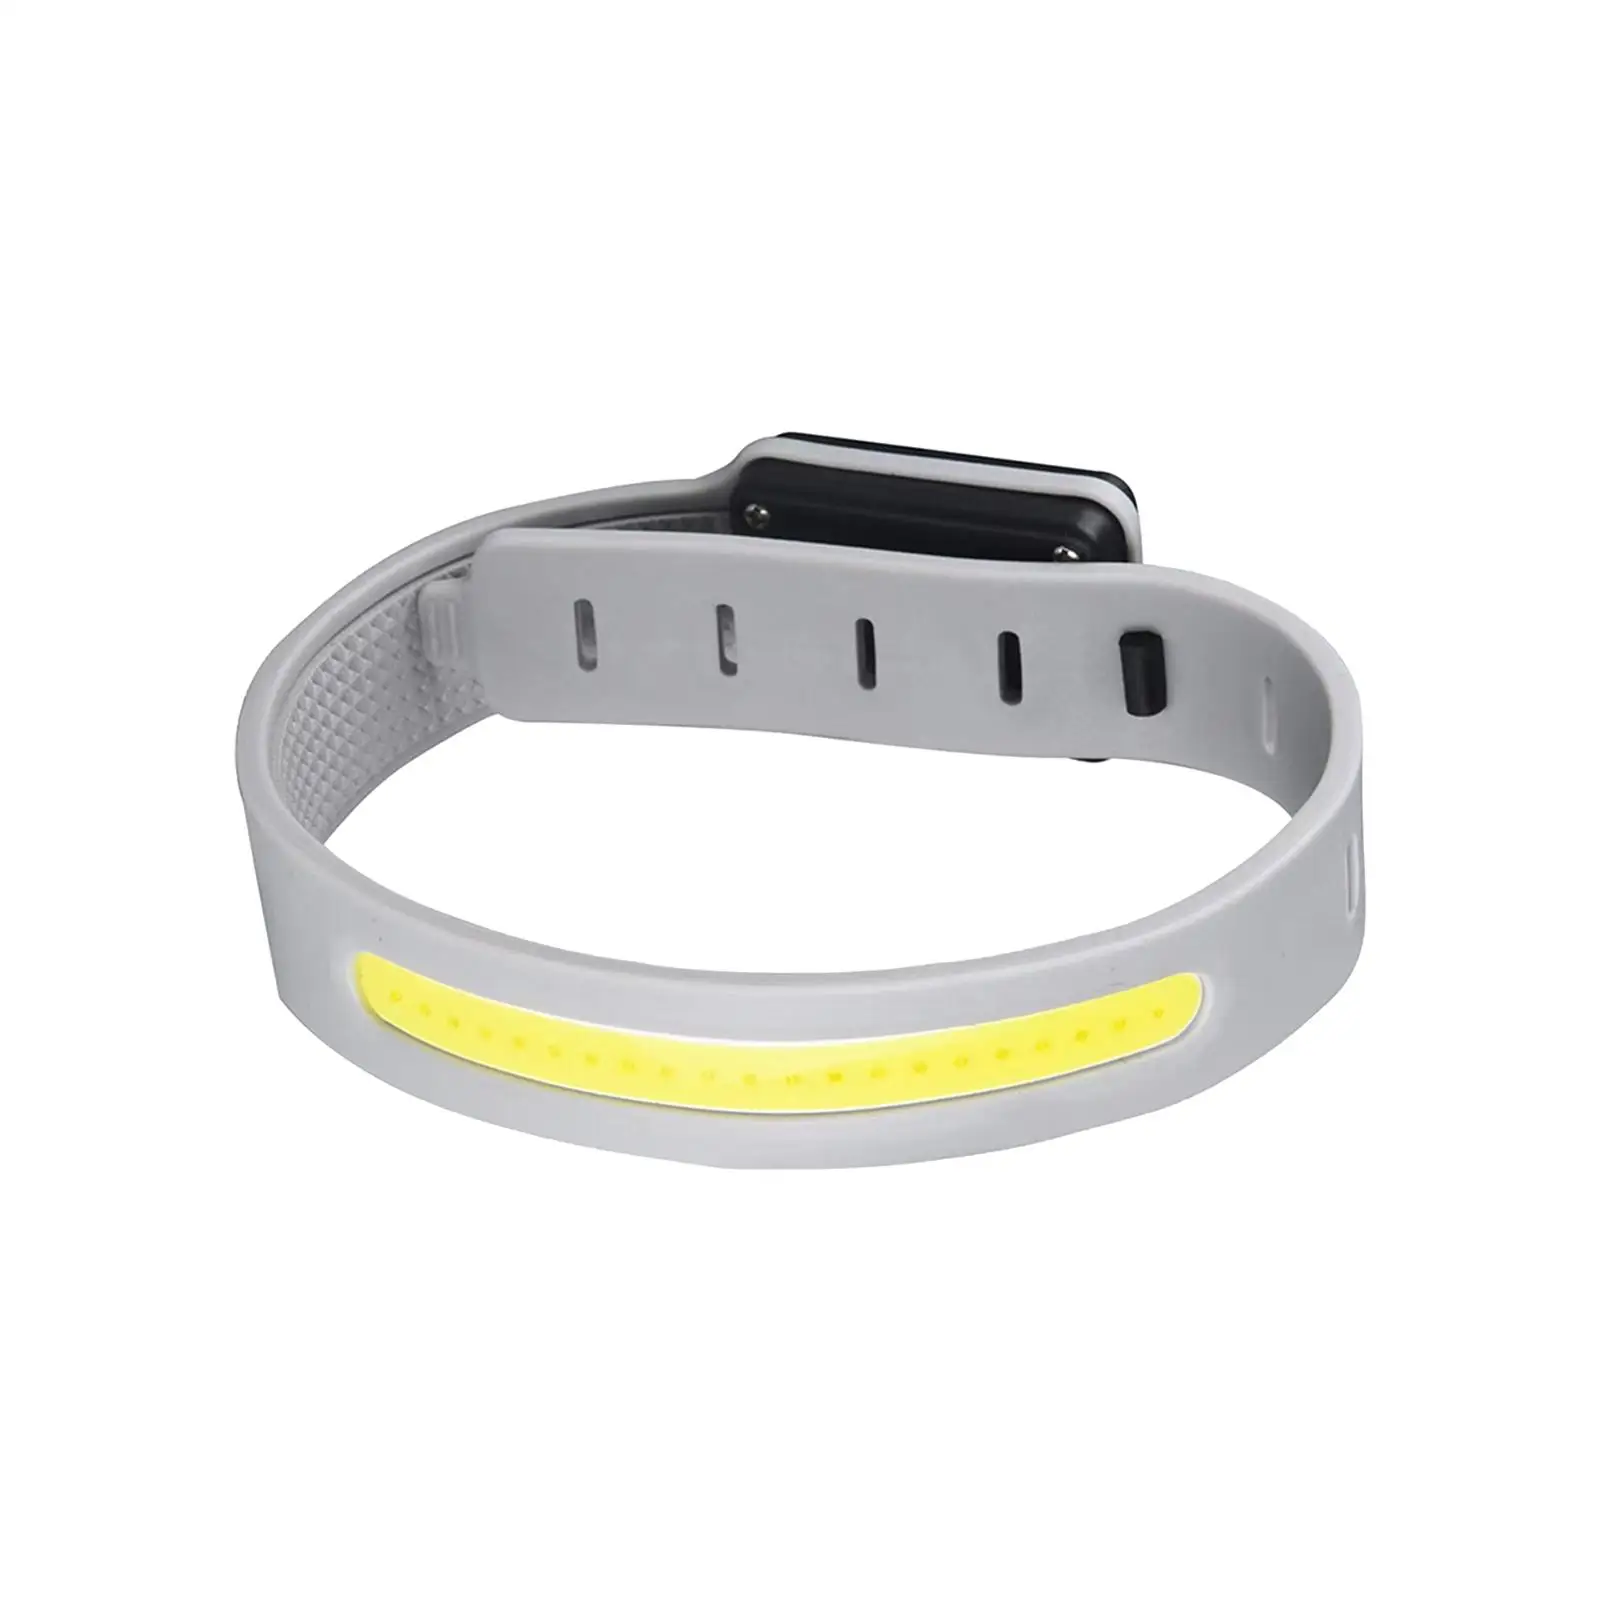 Light up Armband Strap Rainproof Arm Light up Bracelet LED Wristband for Walking Jogging Camping Outdoor Sports Kids Adults